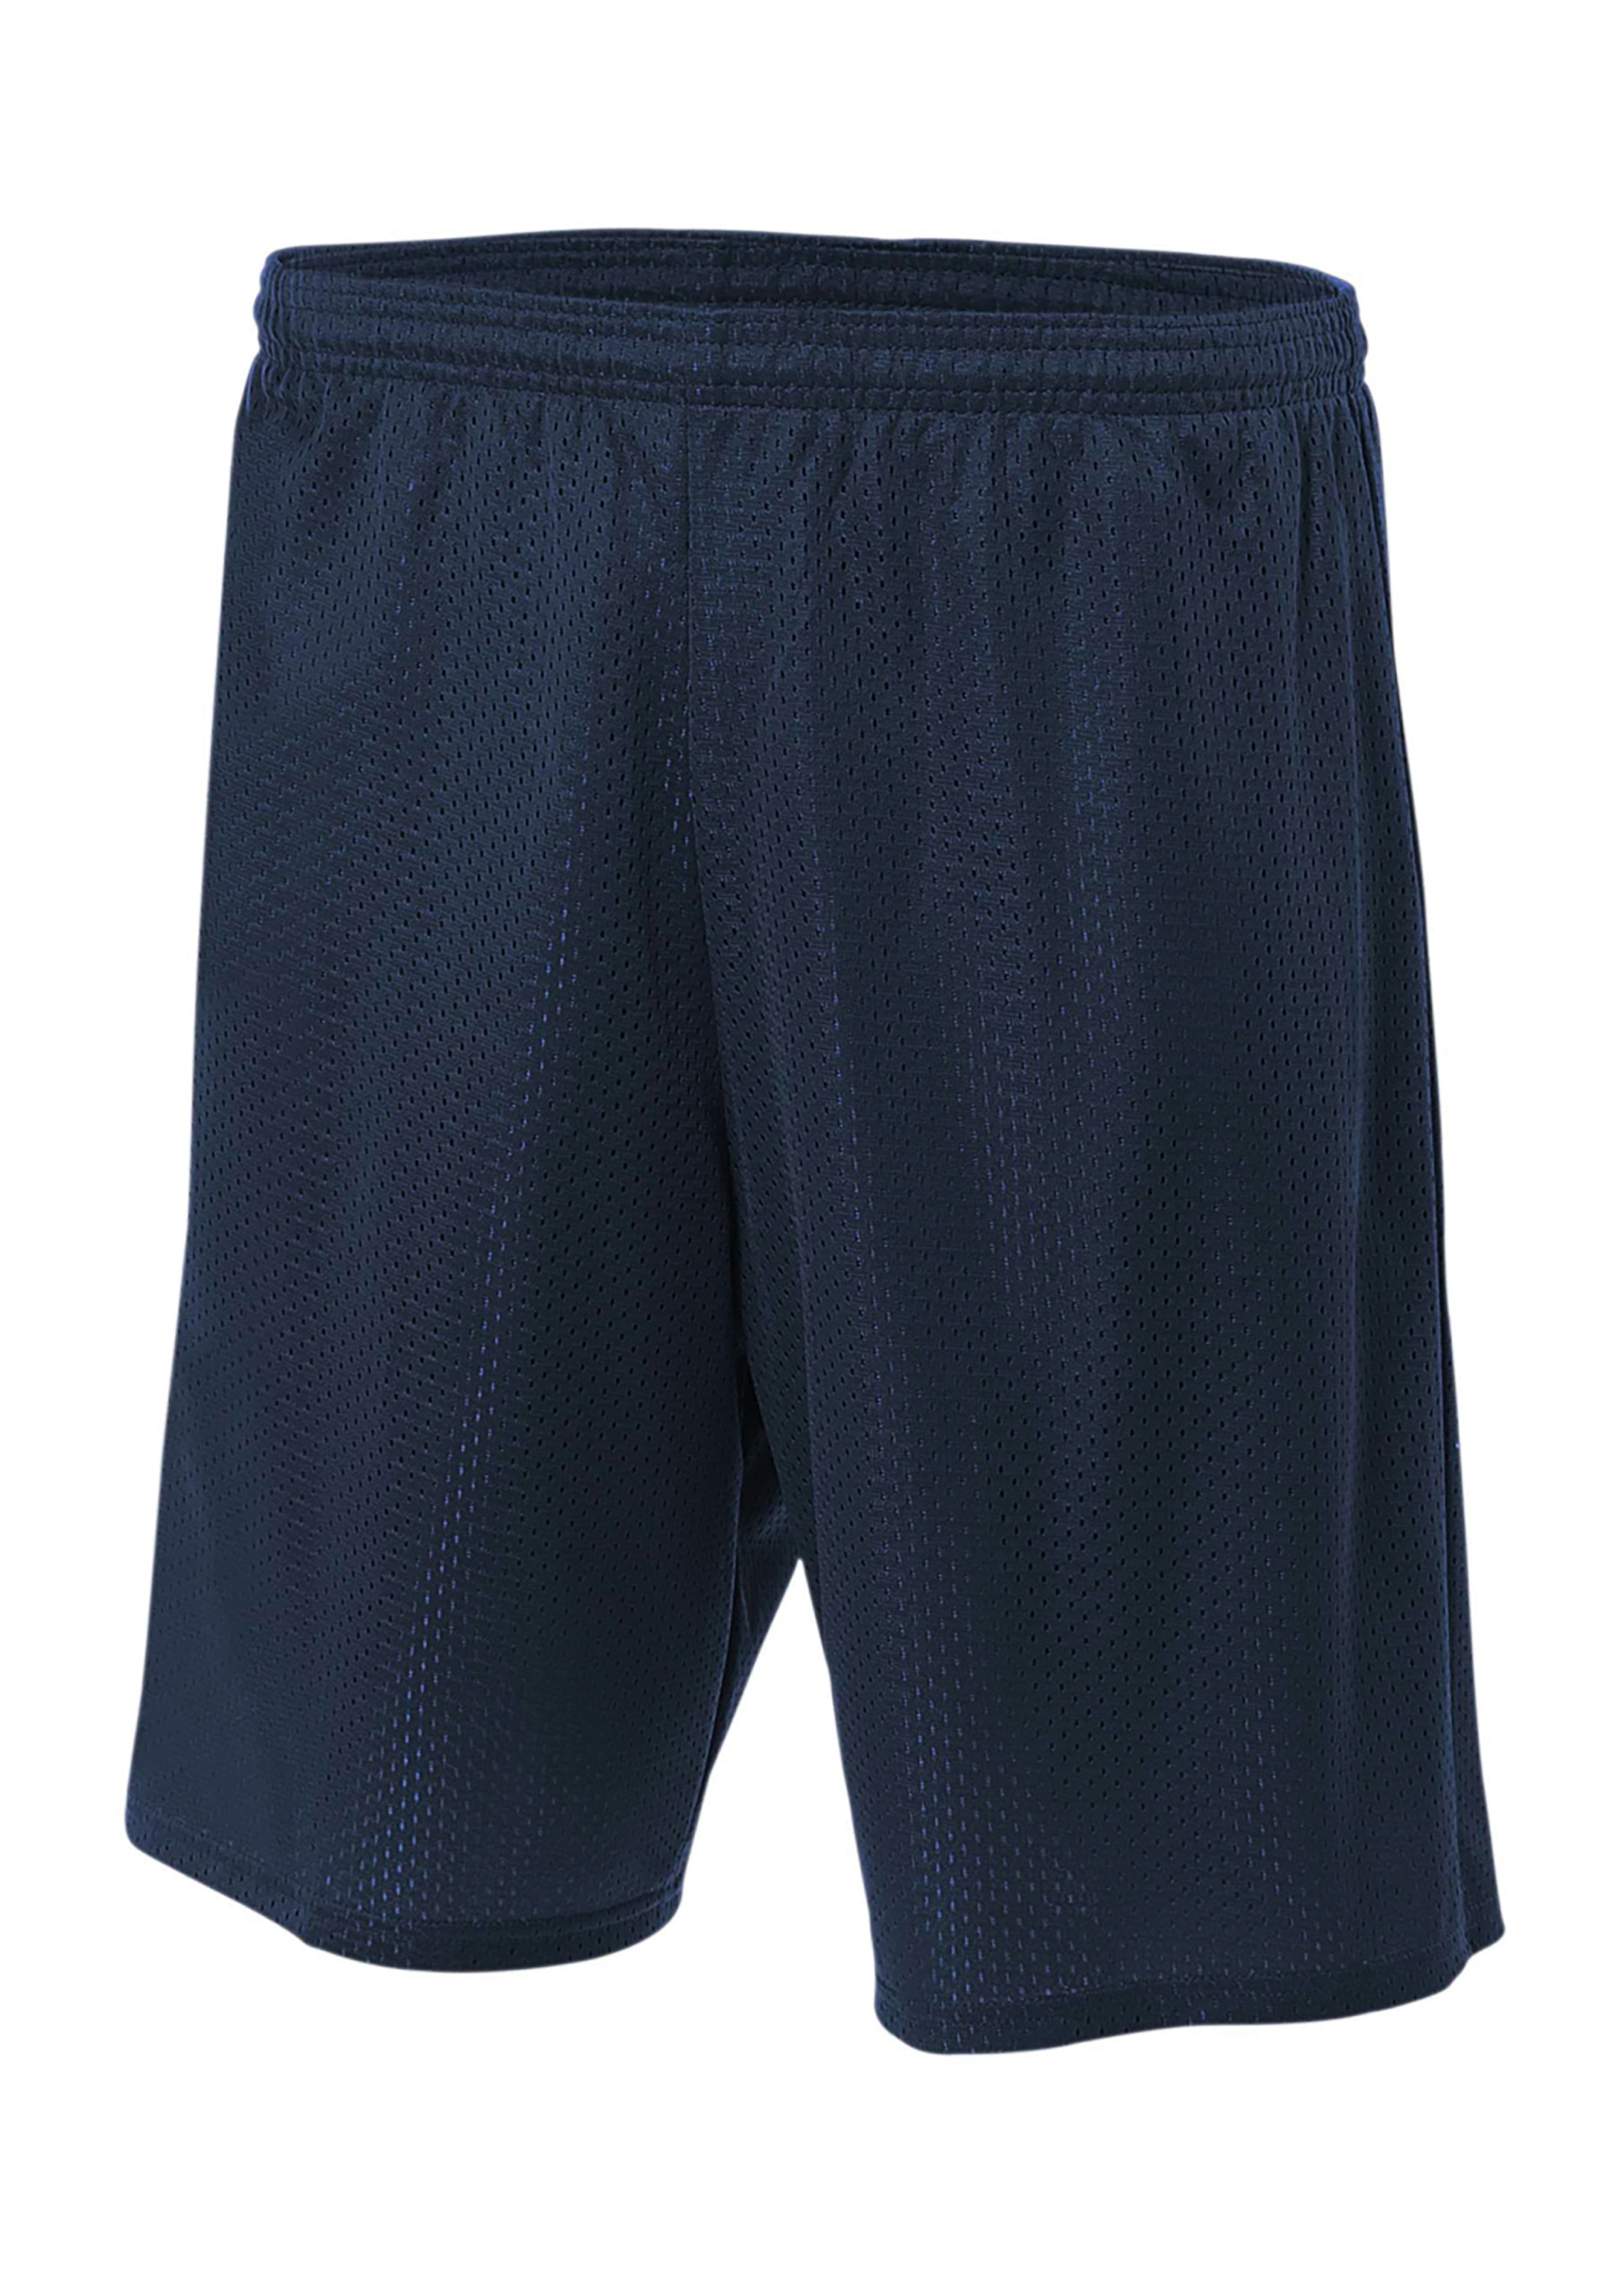 A4 - A4 NB5301 Youth Lined Tricot Mesh Shorts - Navy - L - Walmart.com ...